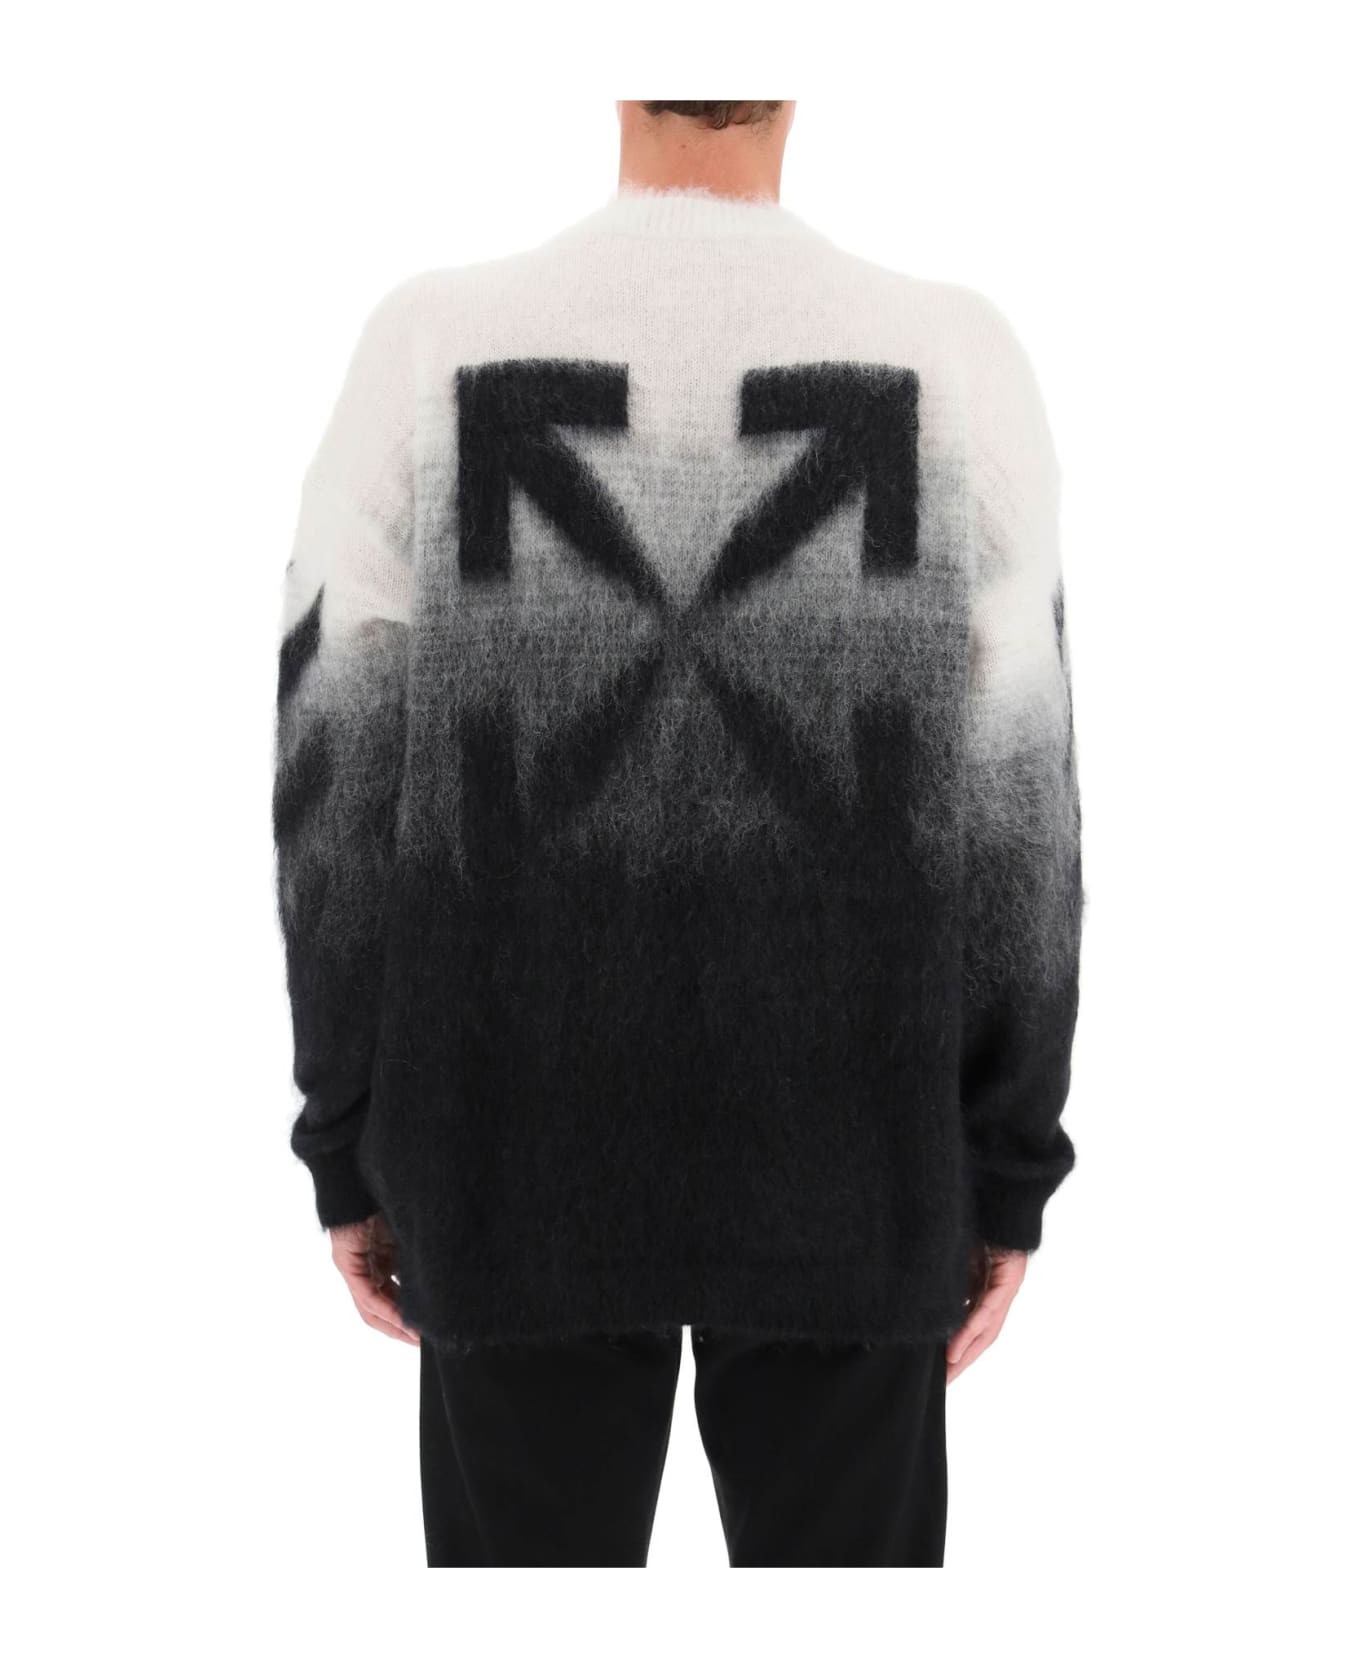 Arrows Mohair Sweater